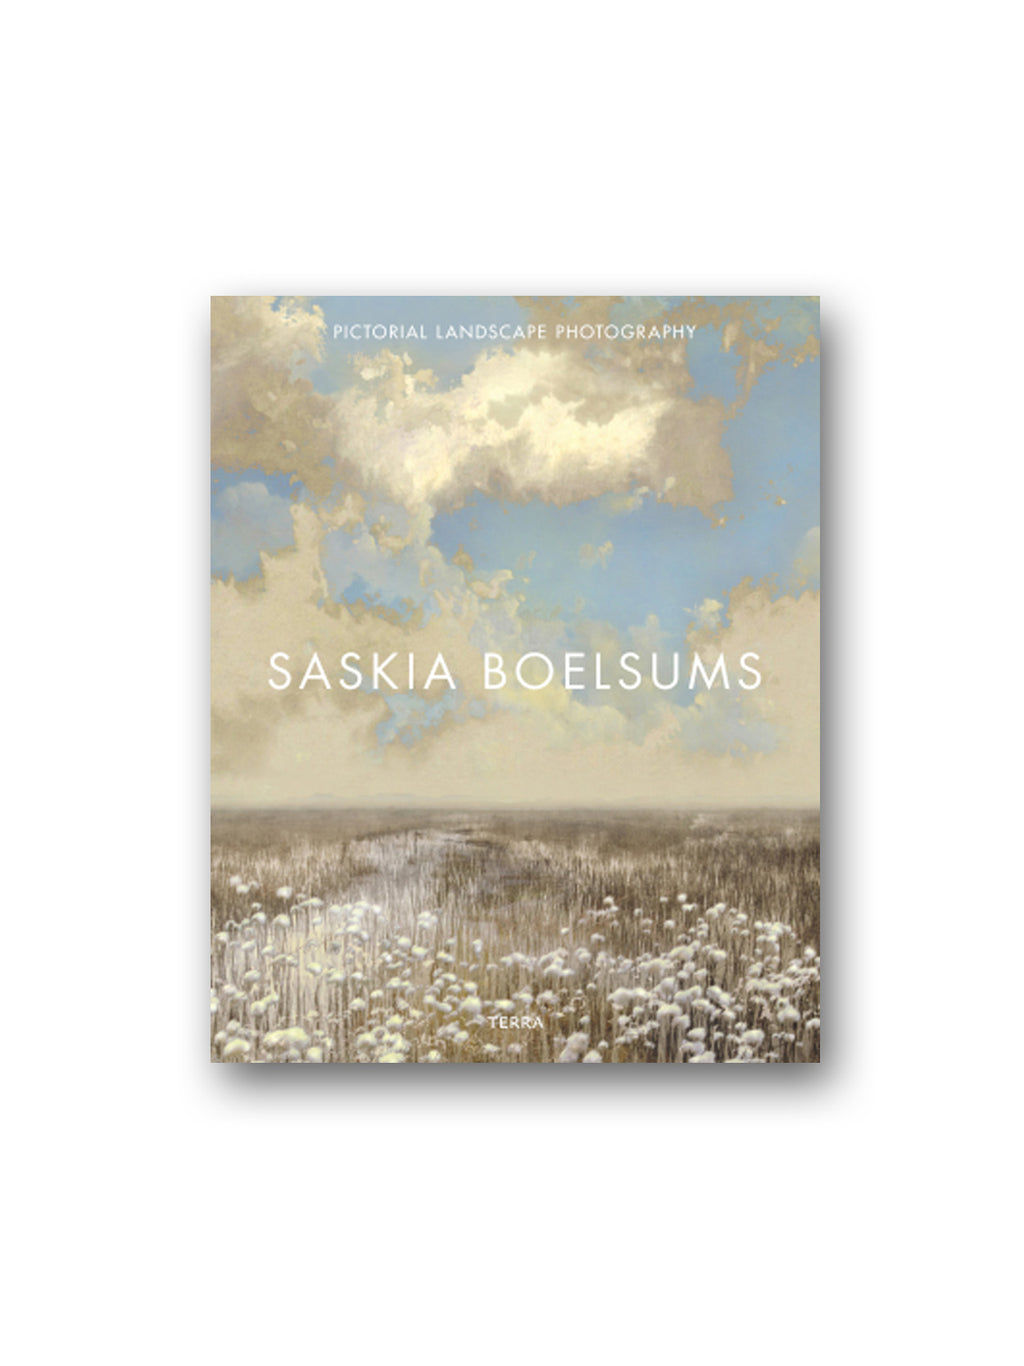 Pictorial Landscape Photography by Saskia Boelsums